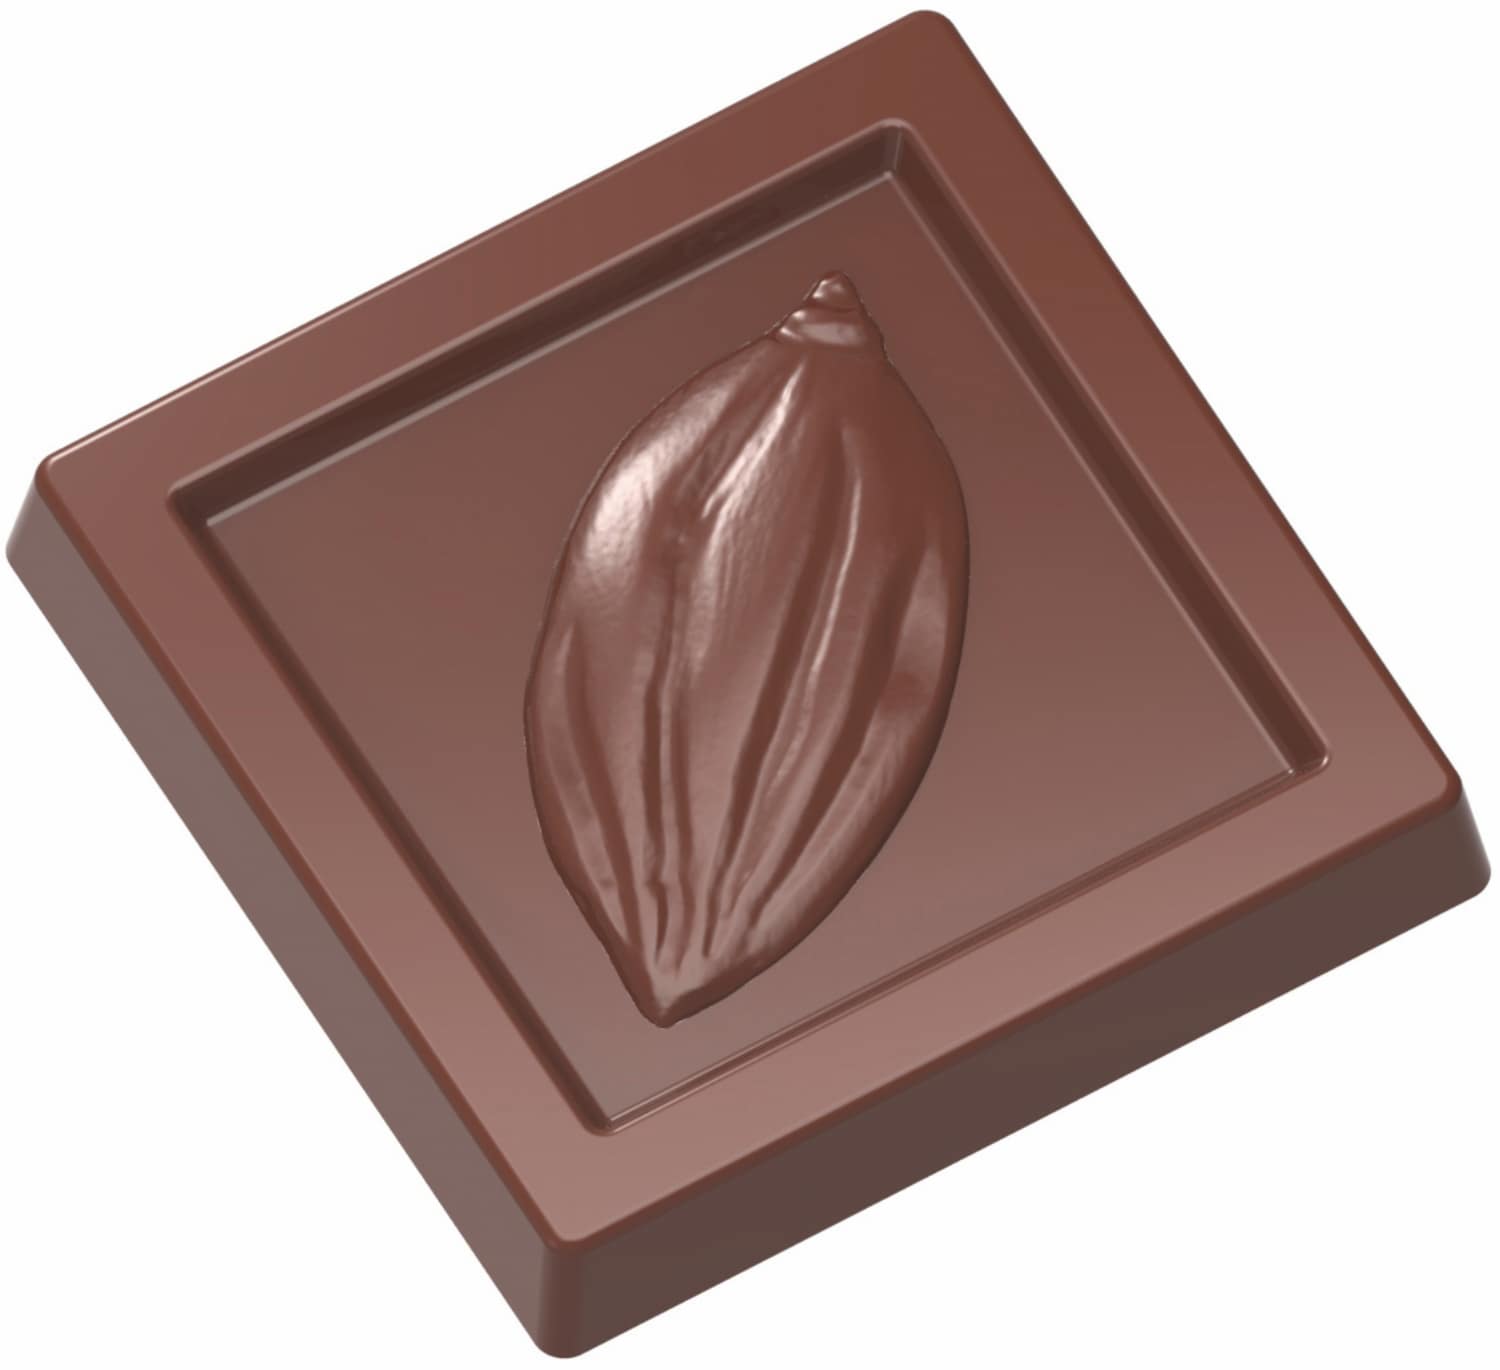 Chocolate mould "Cocoa bean" 421901